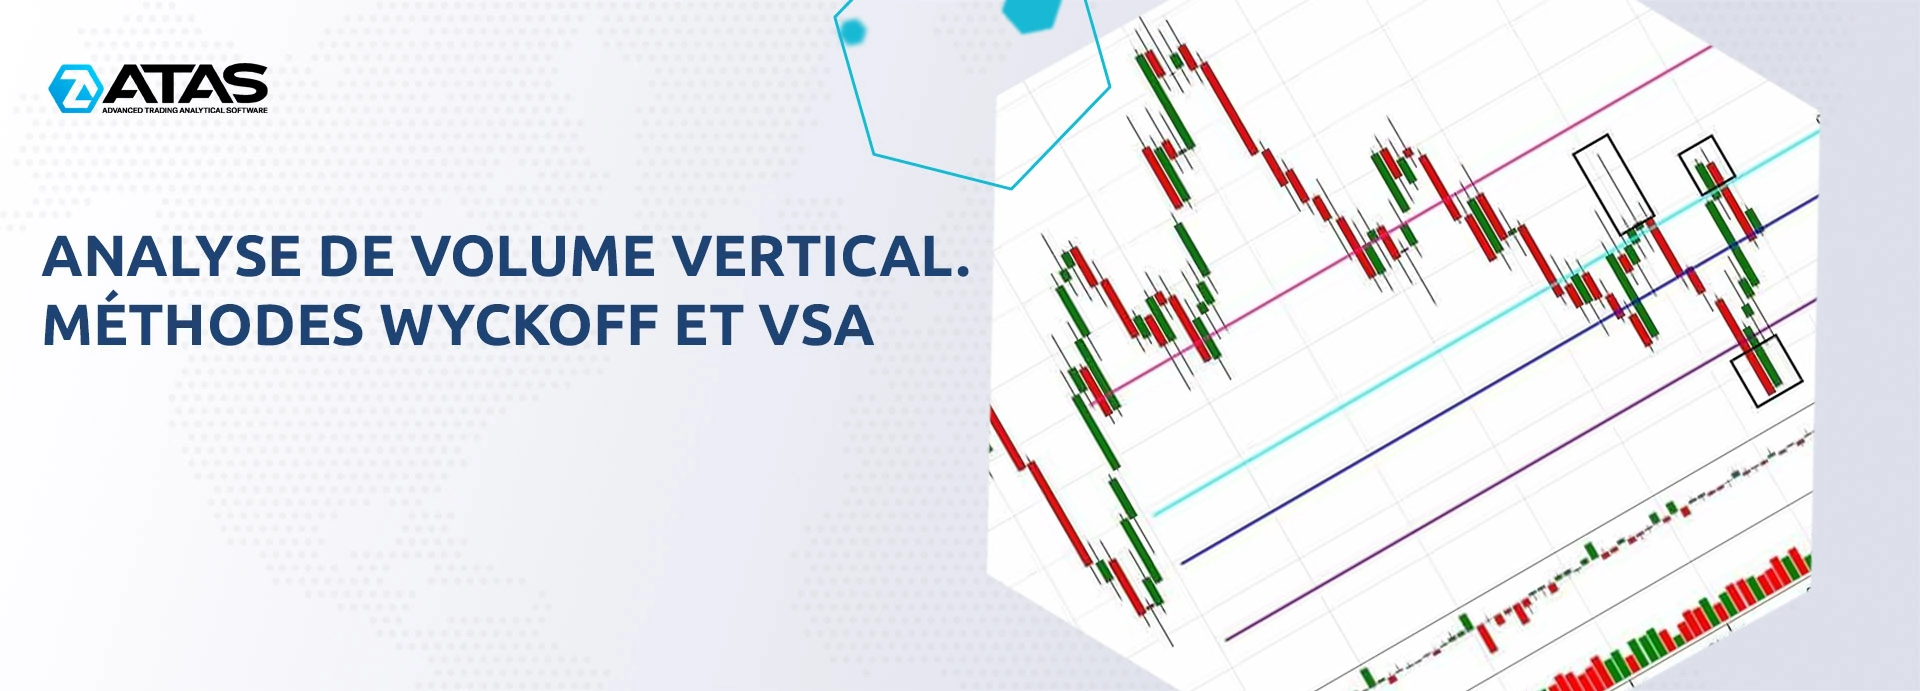 Analyse de volume vertical. Méthodes Wyckoff et VSA